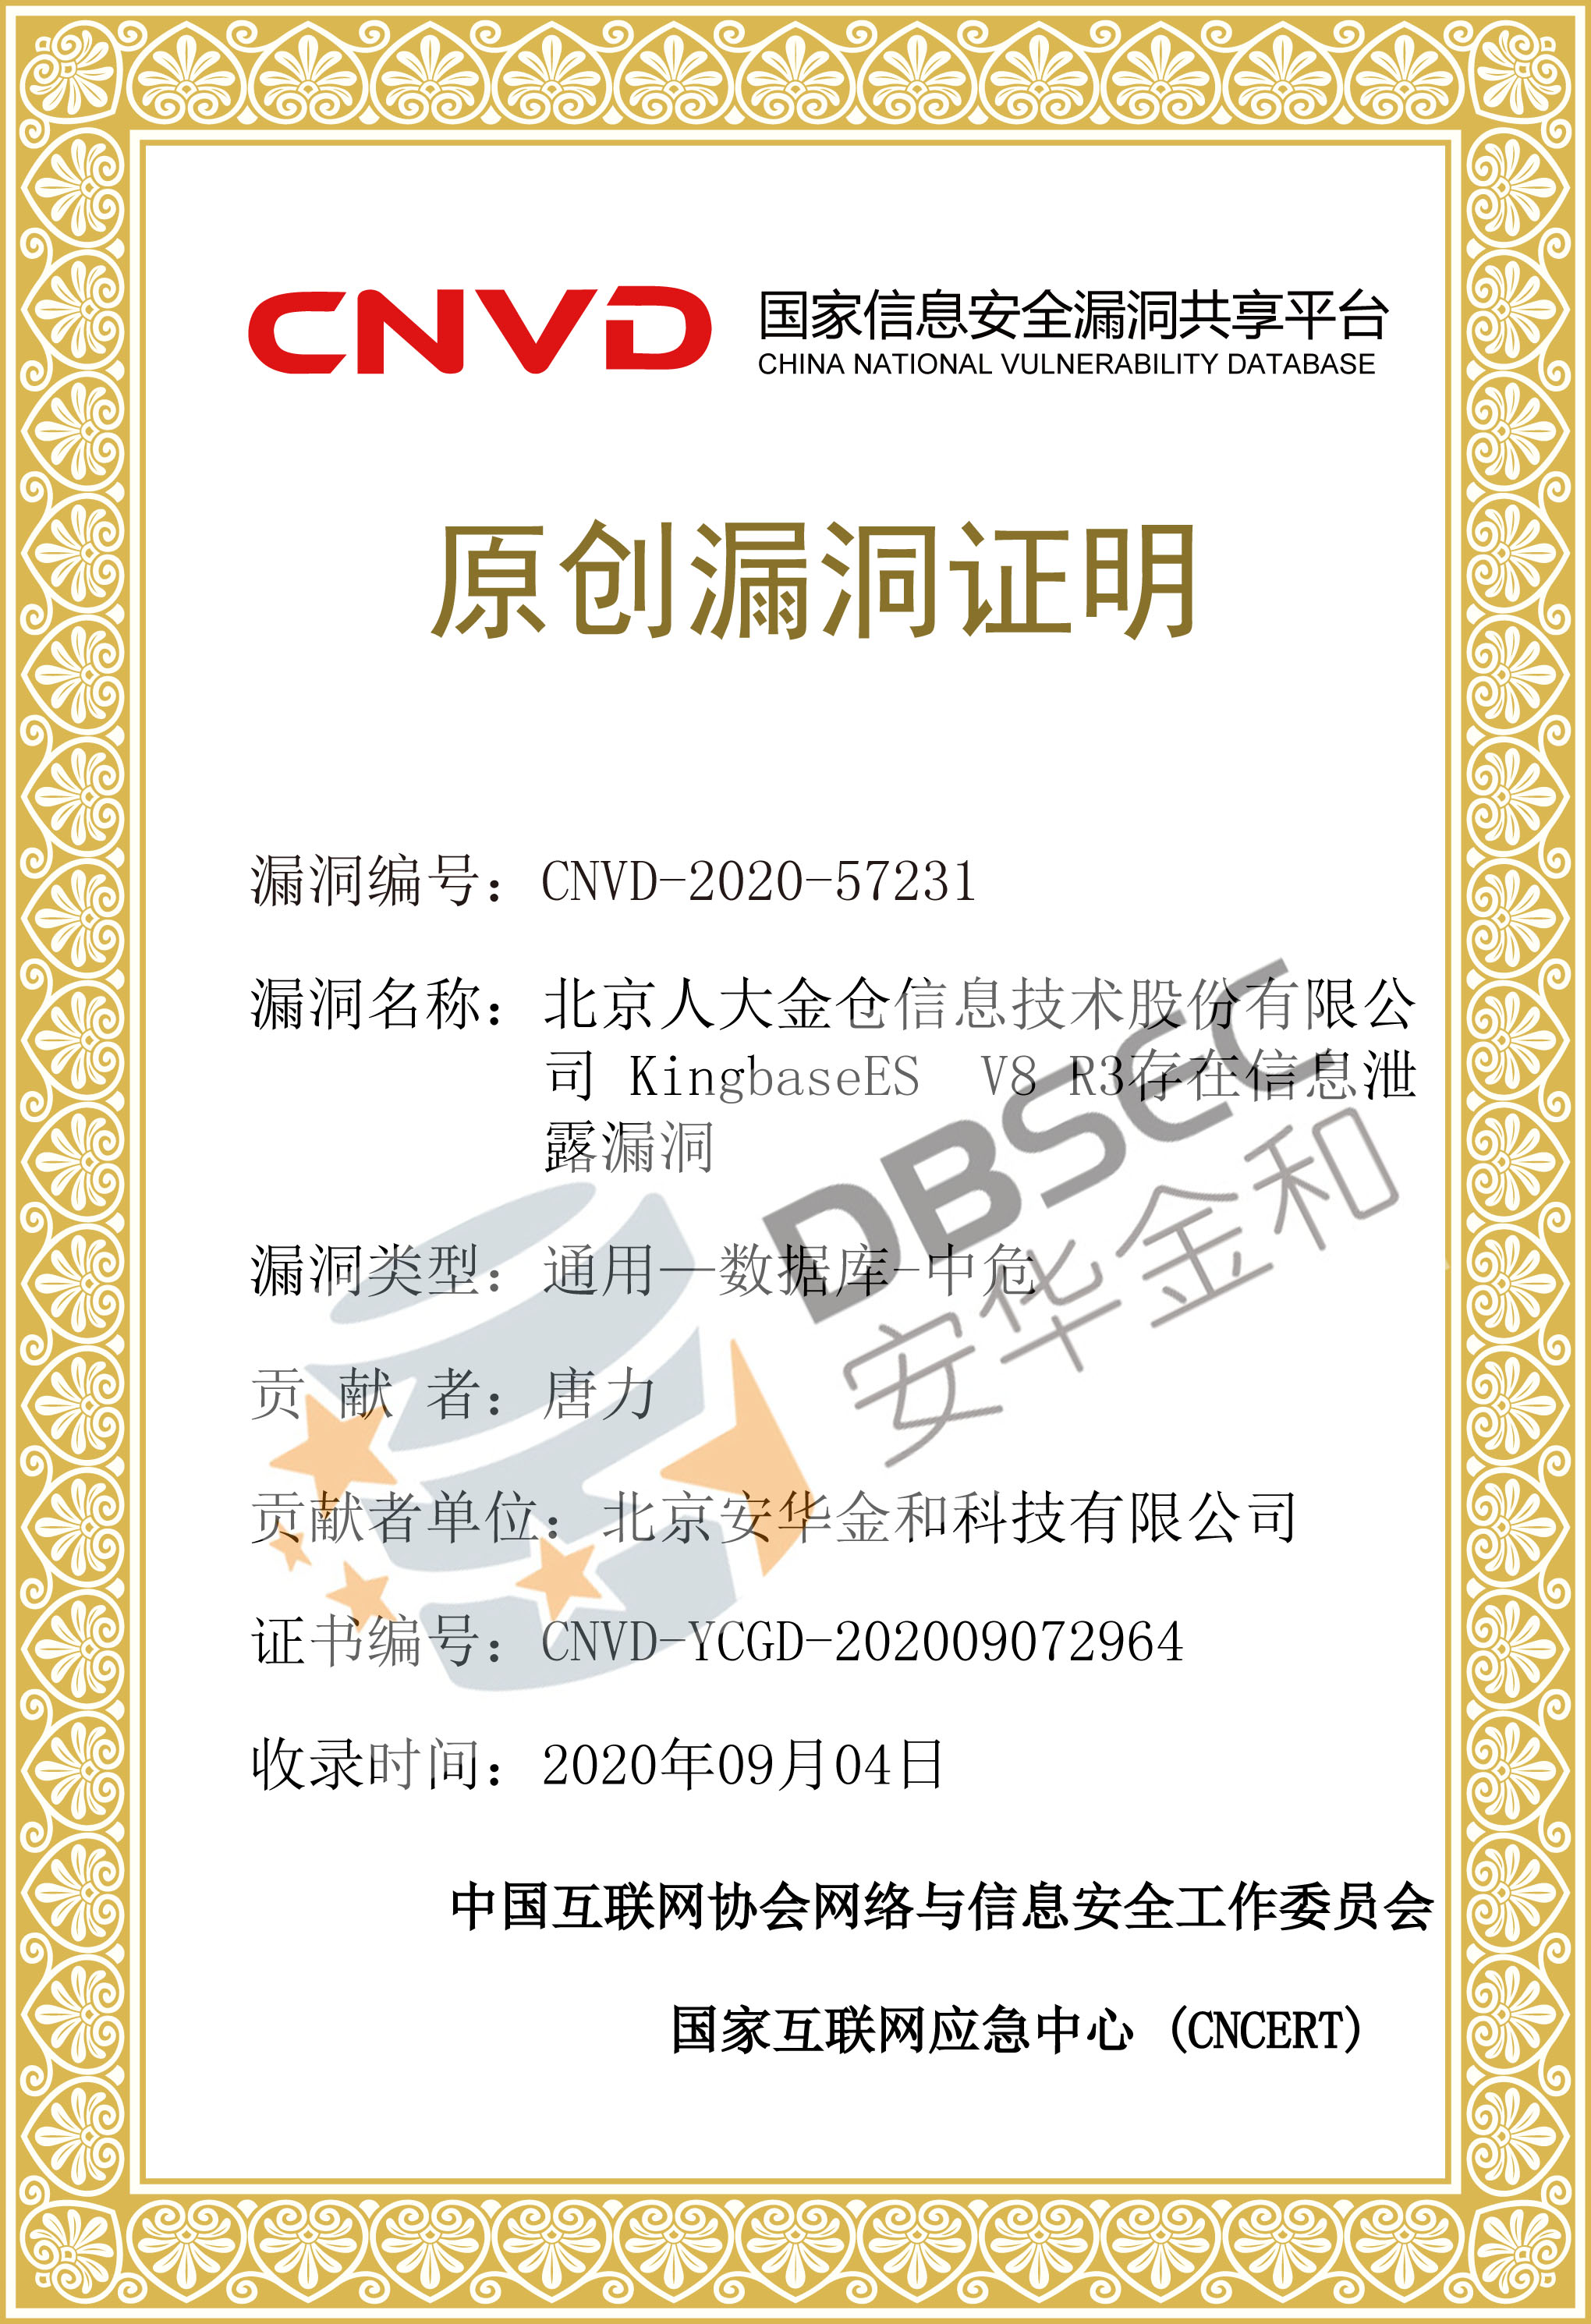 CNVD-YCGD-202009072964